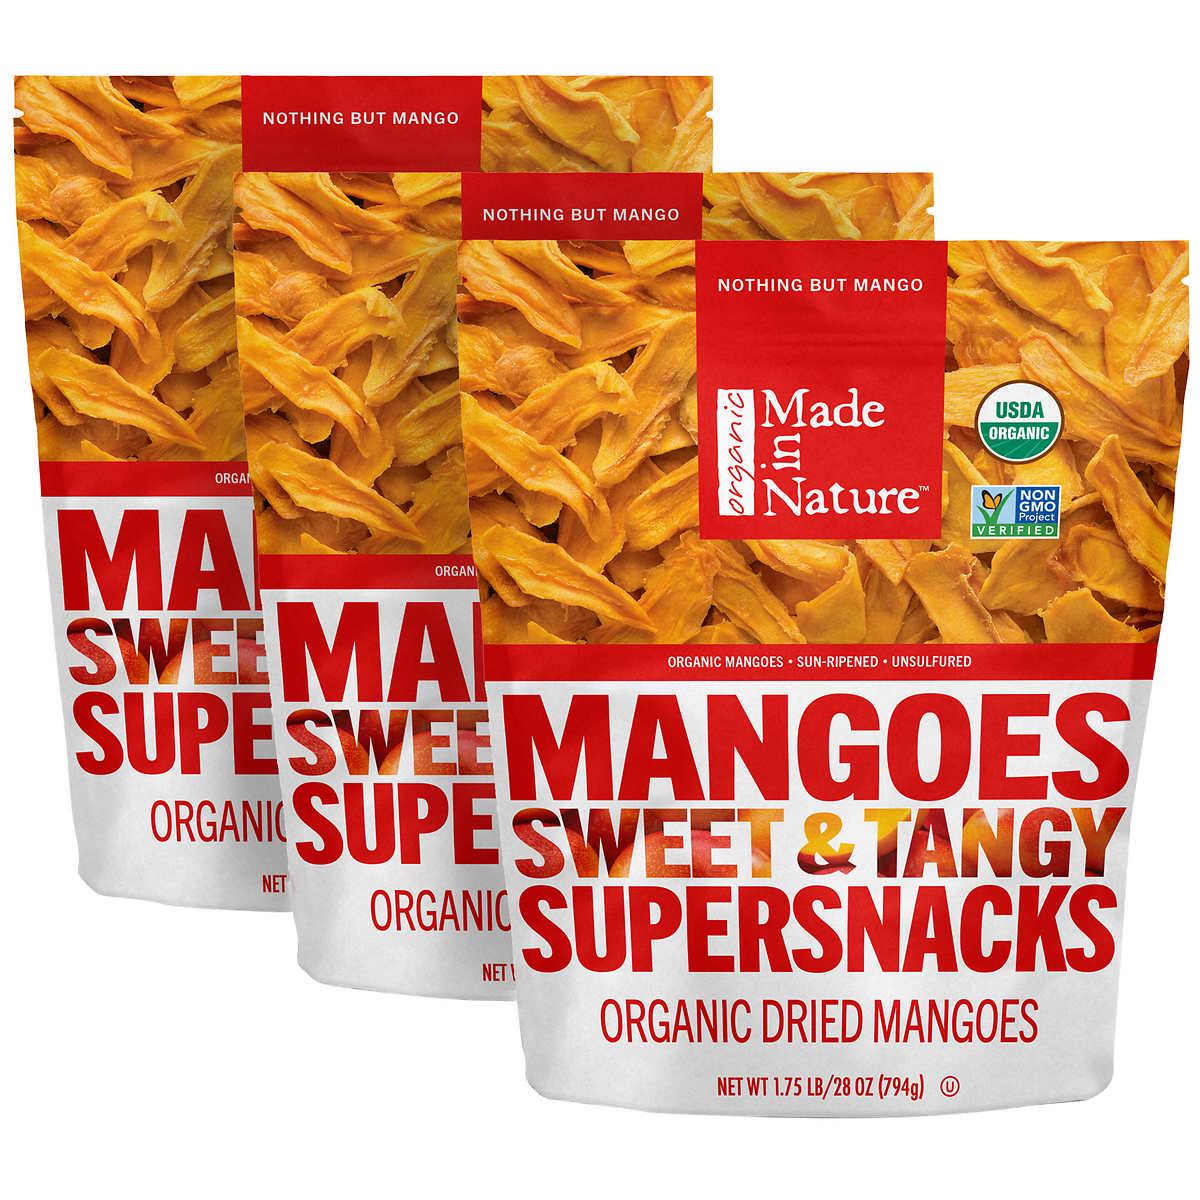 Made in Nature USDA Organic Dried Mangos 28 oz 3-pack